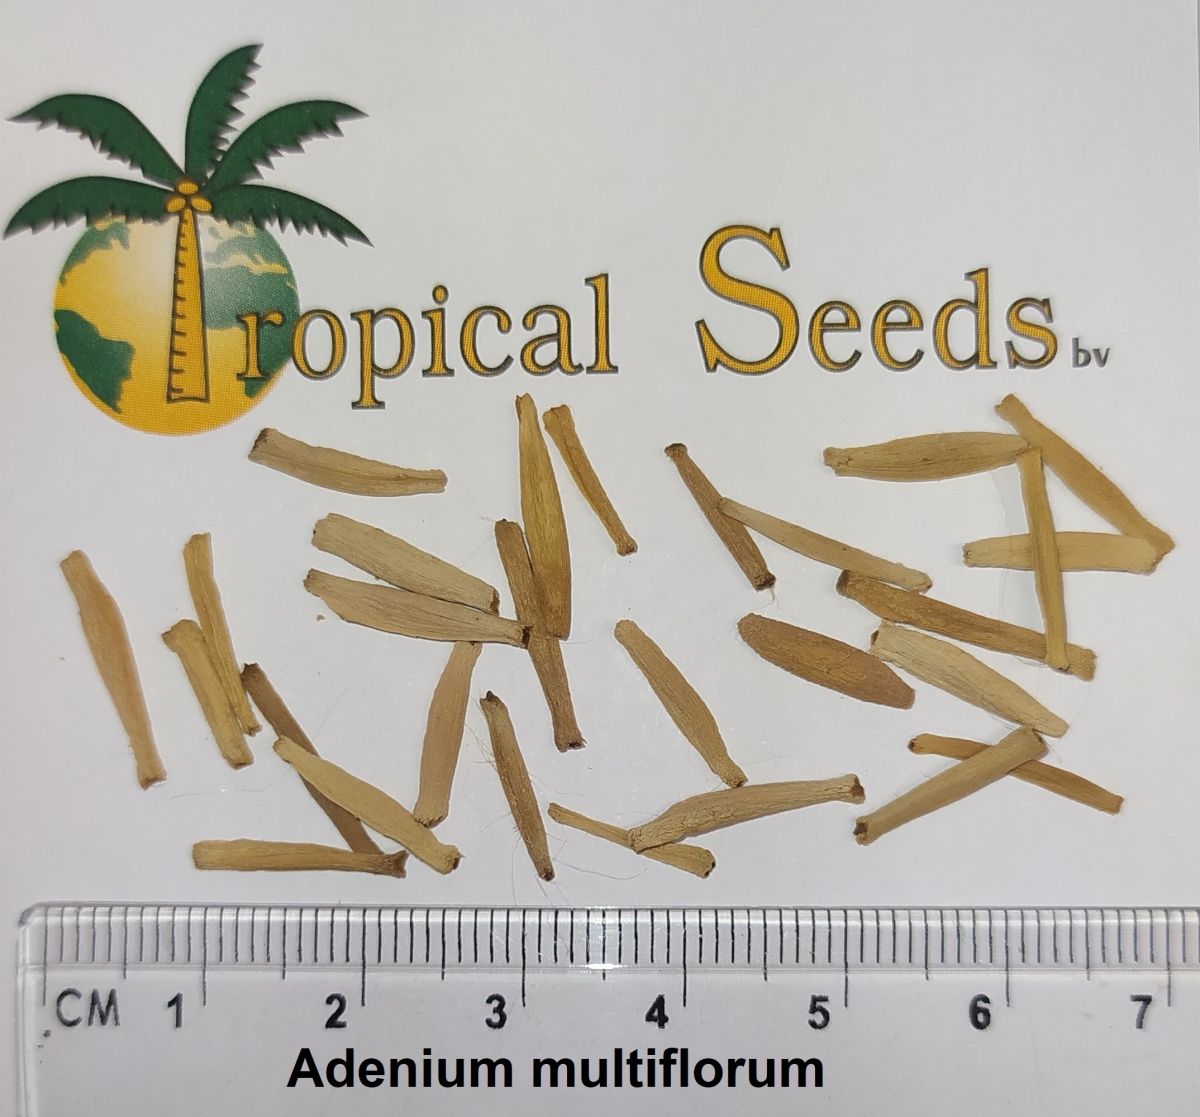 Adenium multiflorum Seeds